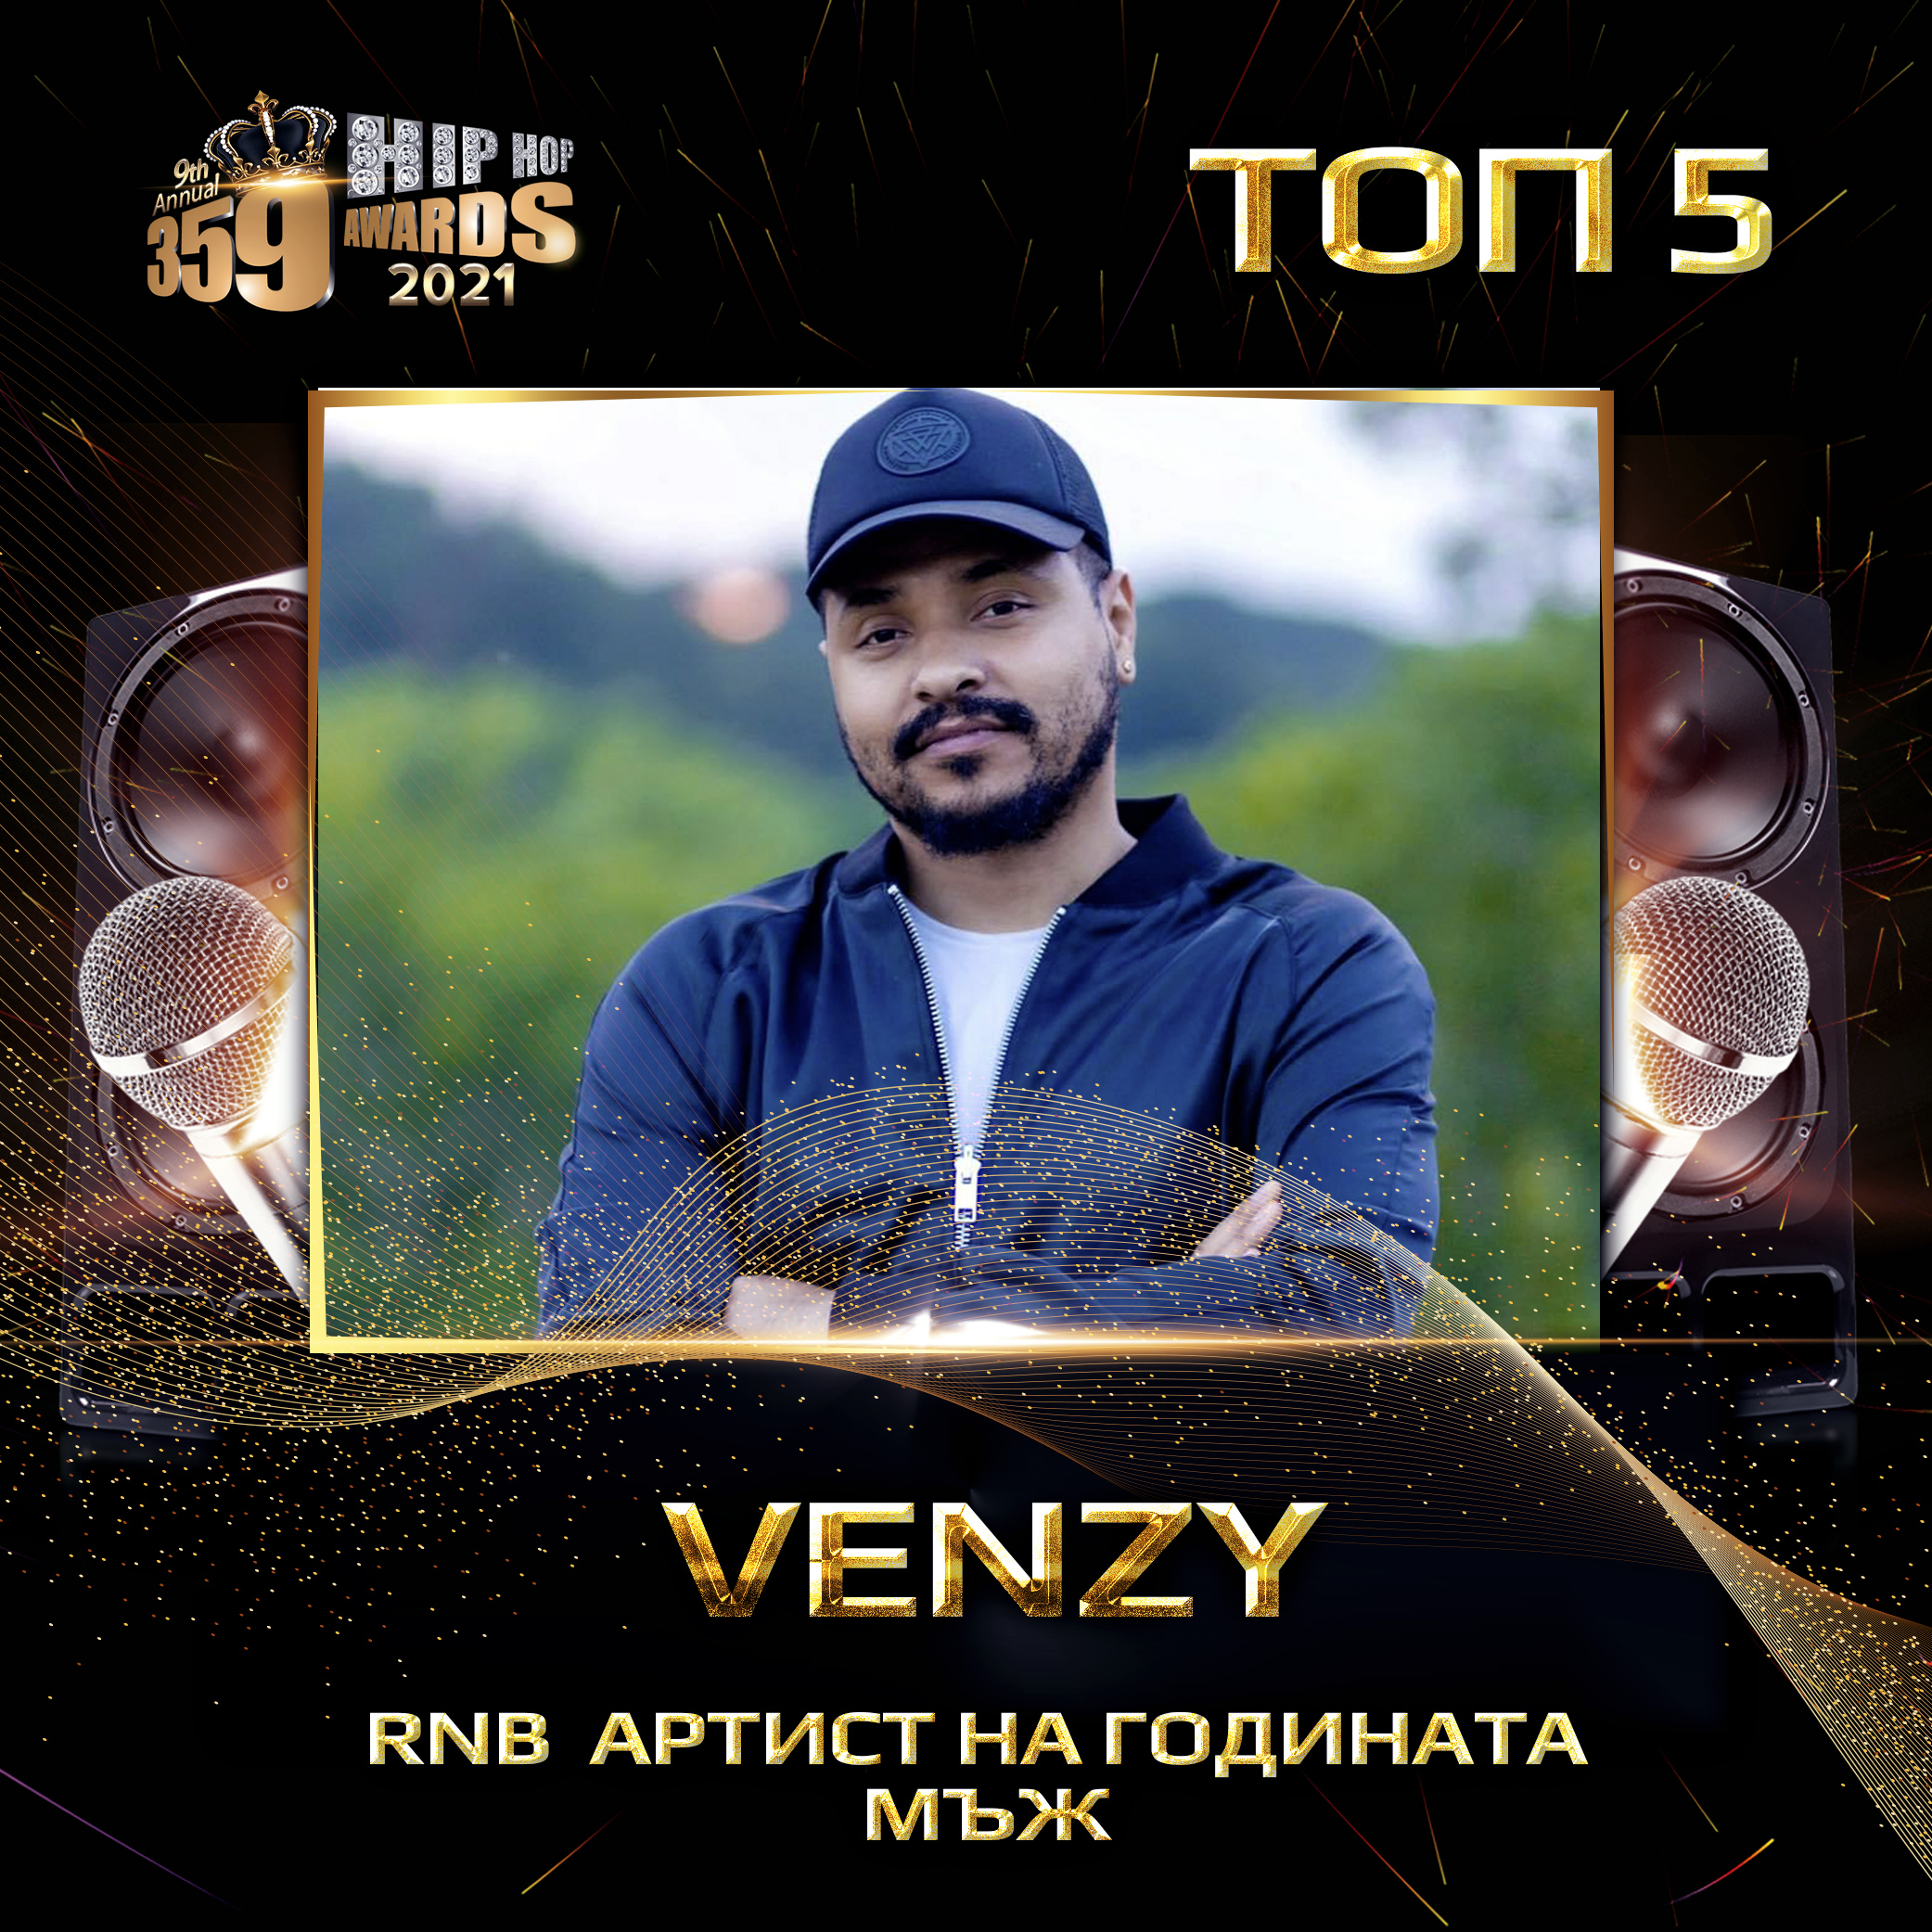 top 5  359 awards 2021 rnb men  venzy - Най-добър RNB артист 2020 / Мъж